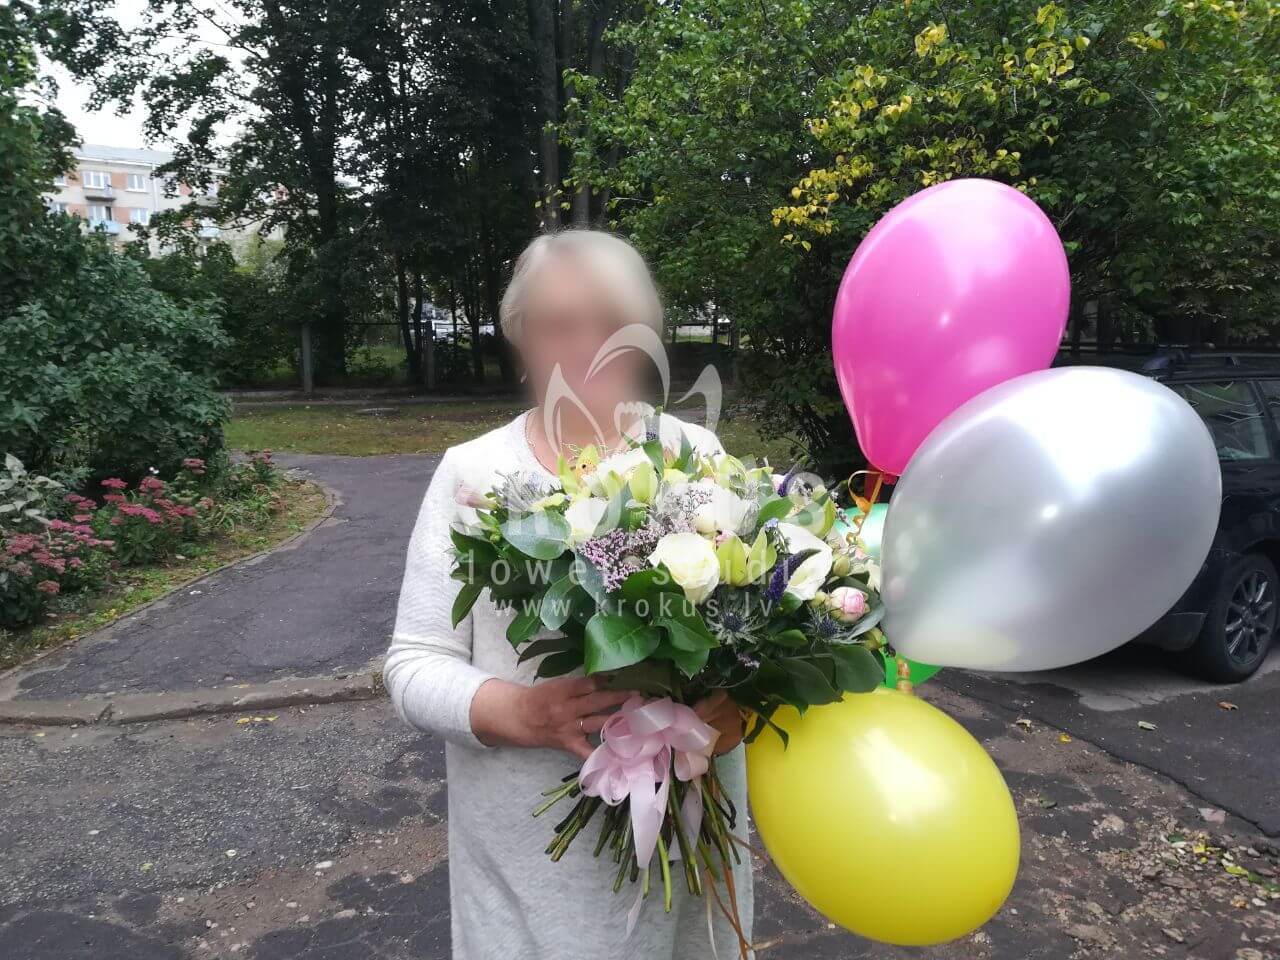 Deliver flowers to Rīga (meadow flowerslimoniumgoldenrodlupinebruniaorchidswhite rosesblue cornflowerveronicacheesewoodpeoniesdavid austin roses)